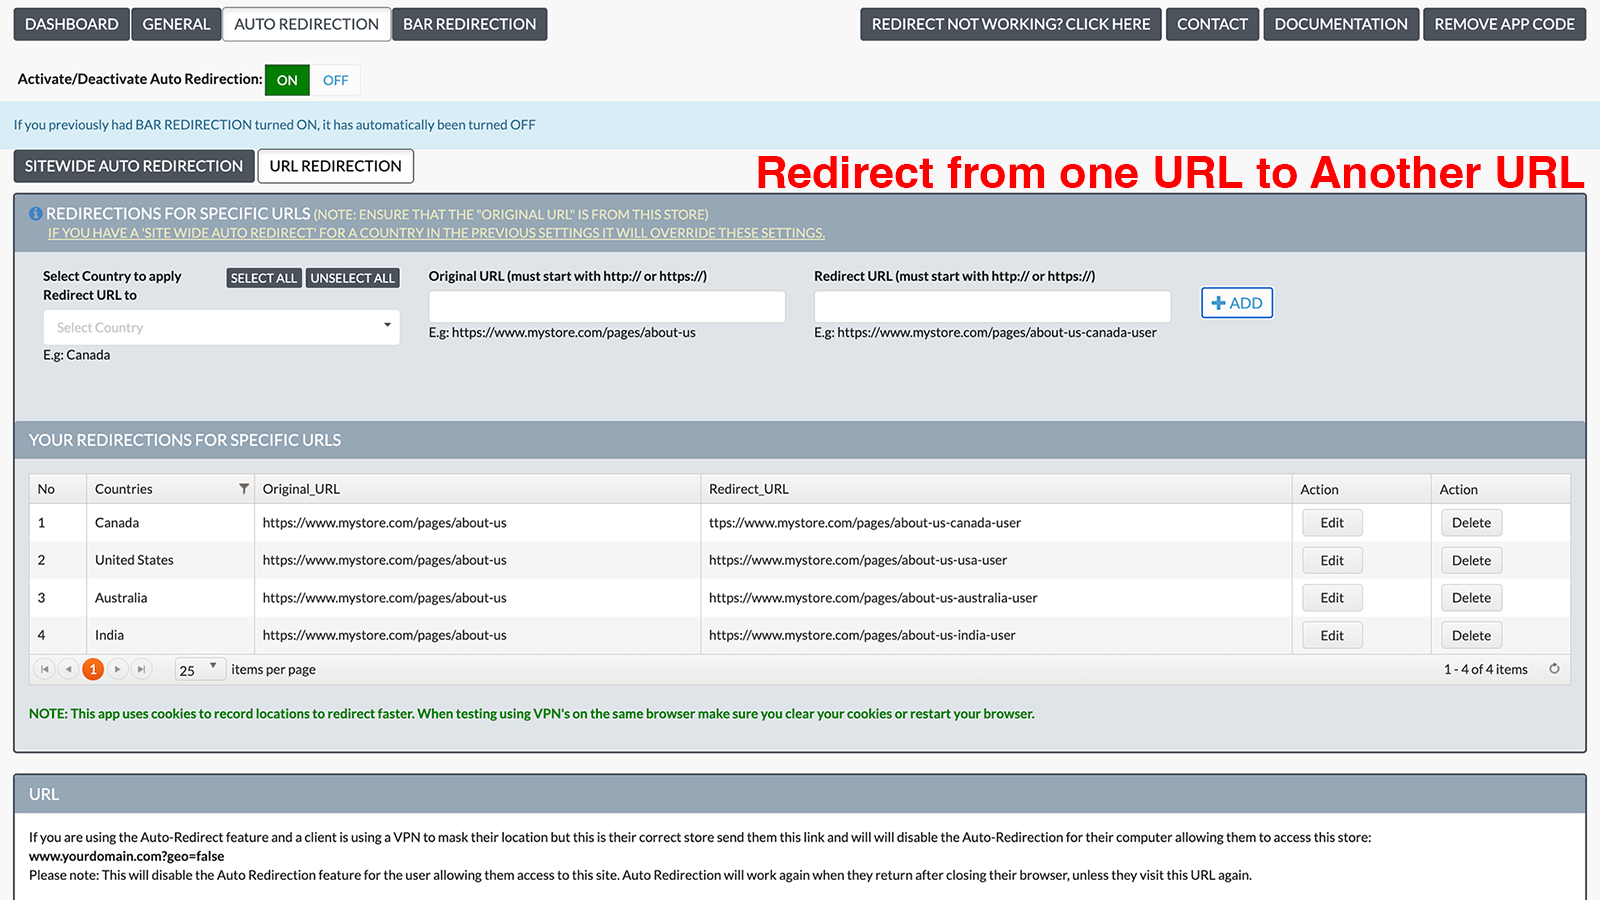 URL GeoLocation Redirect